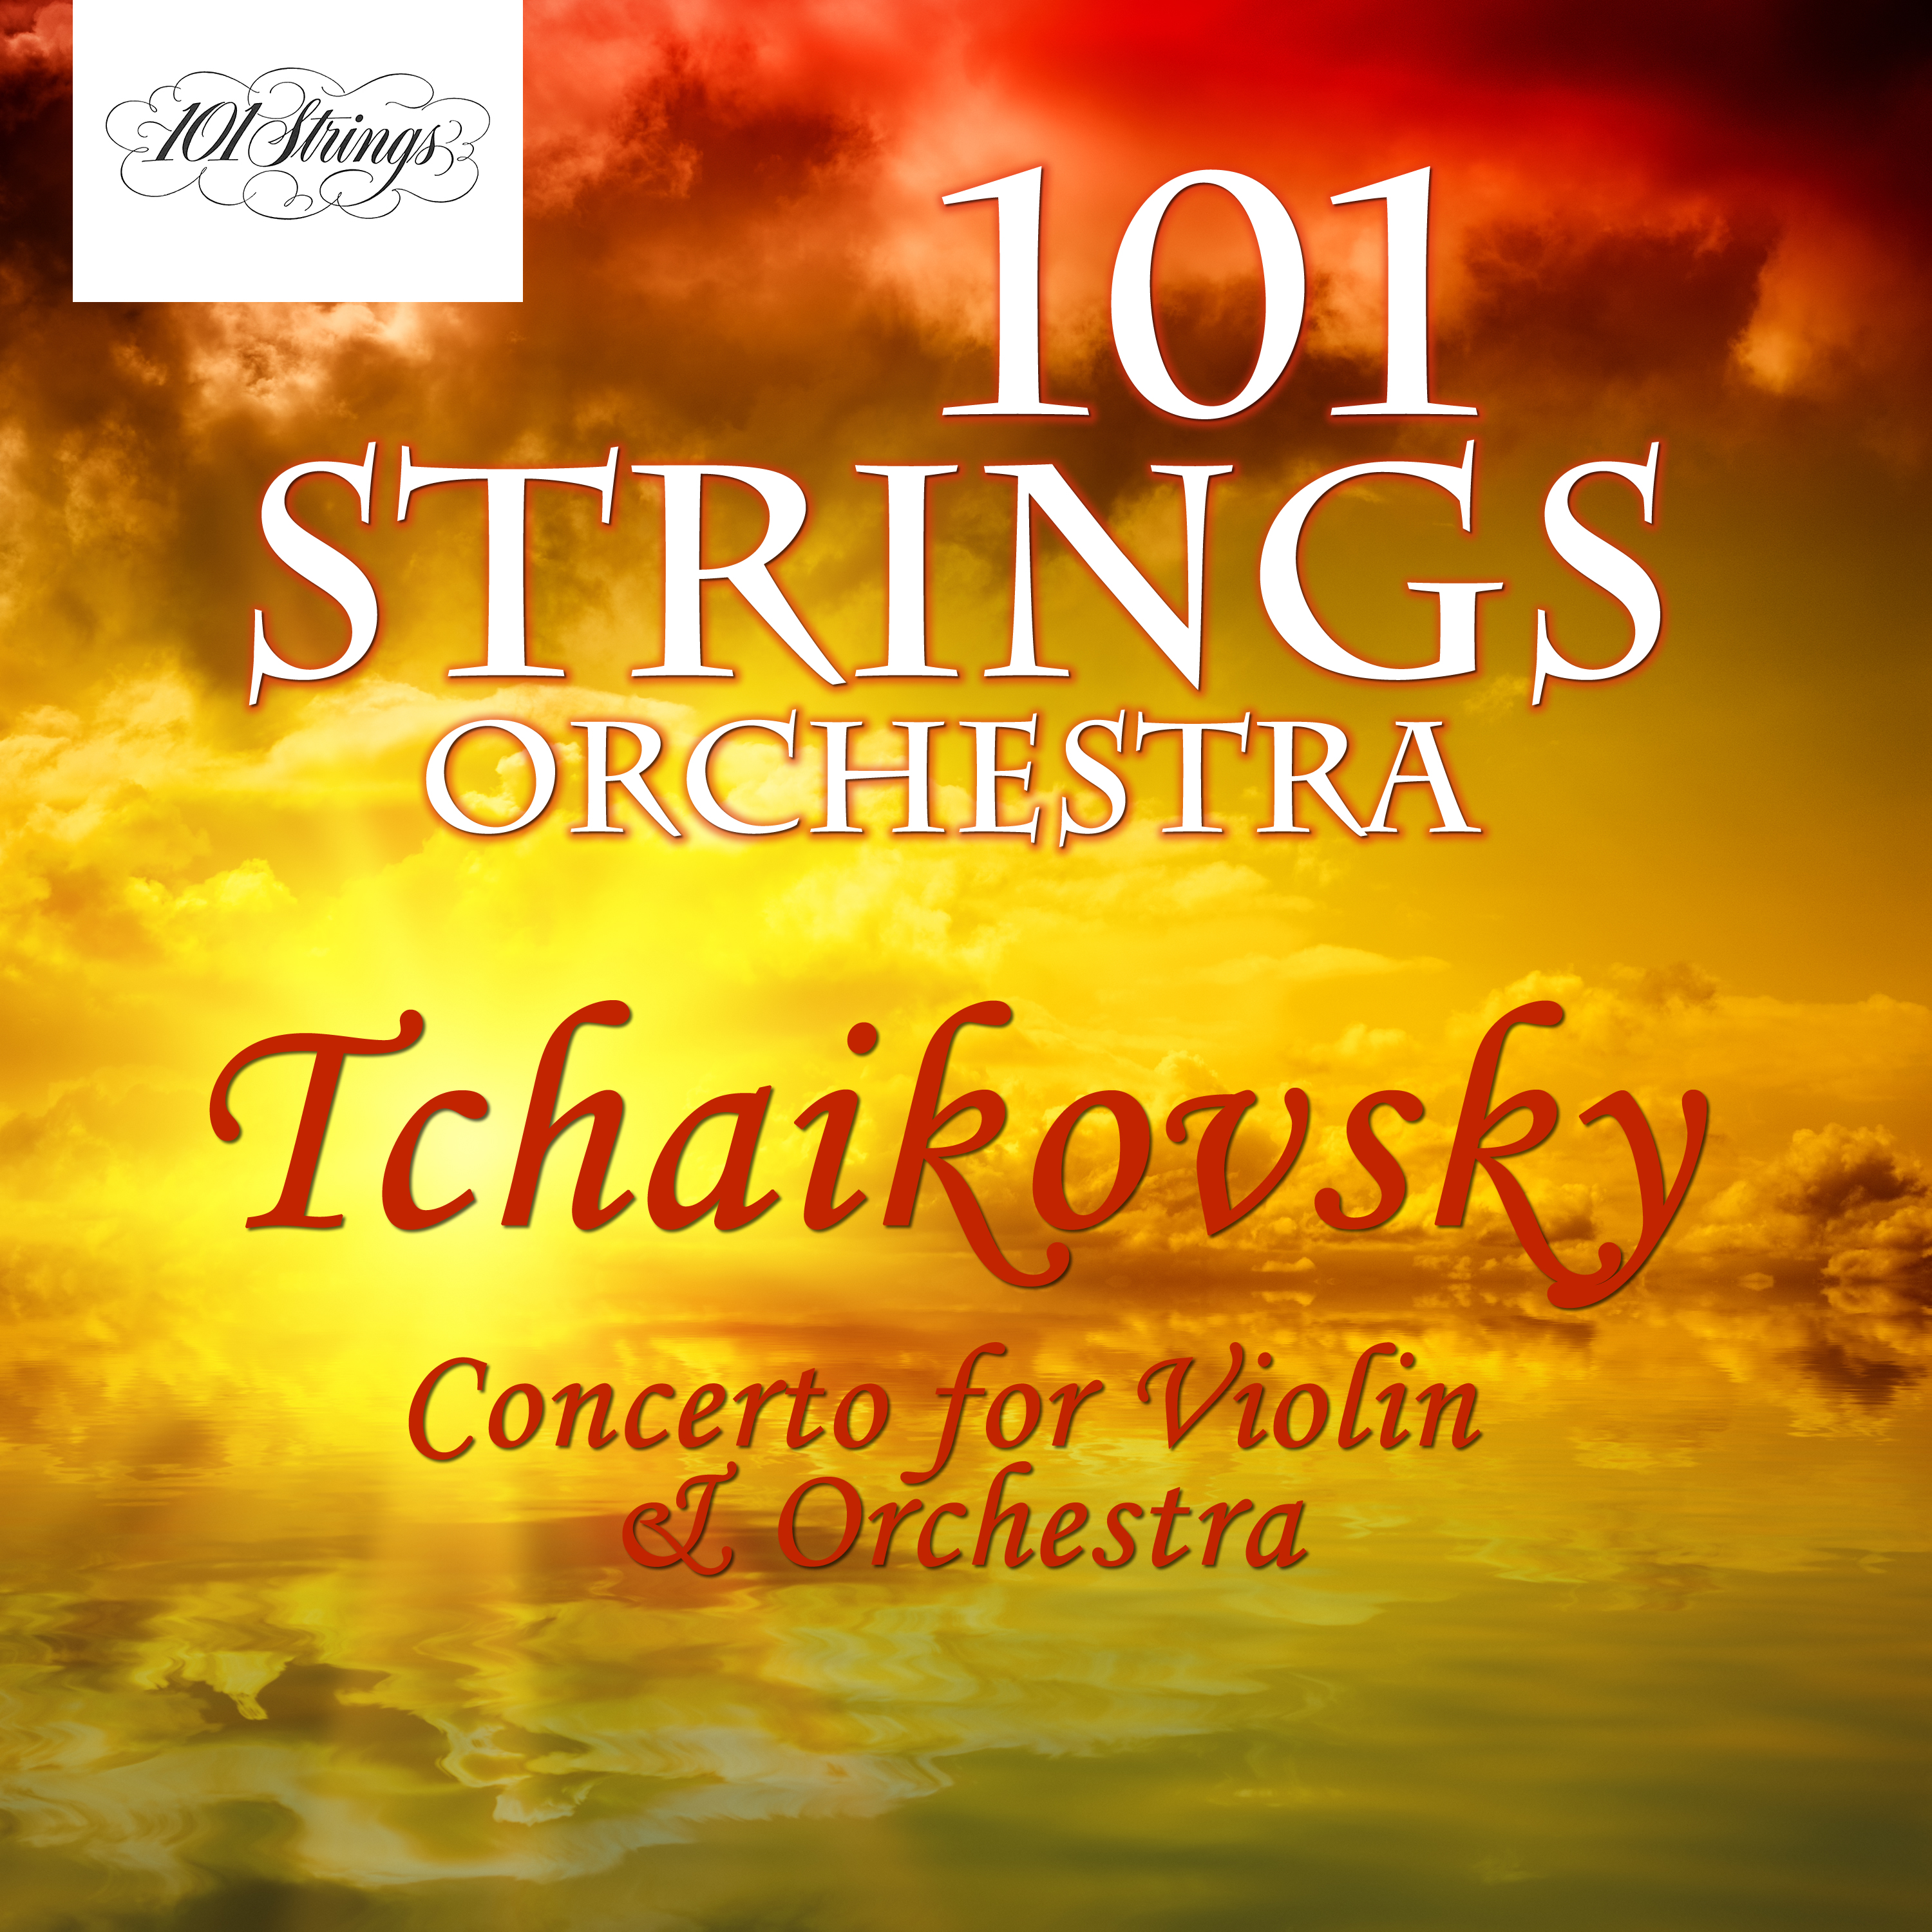 Pyotr Ilyich Tchaikovsky: Concerto for Violin & Orchestra in D Major, Op. 35: Canzonetta Andante